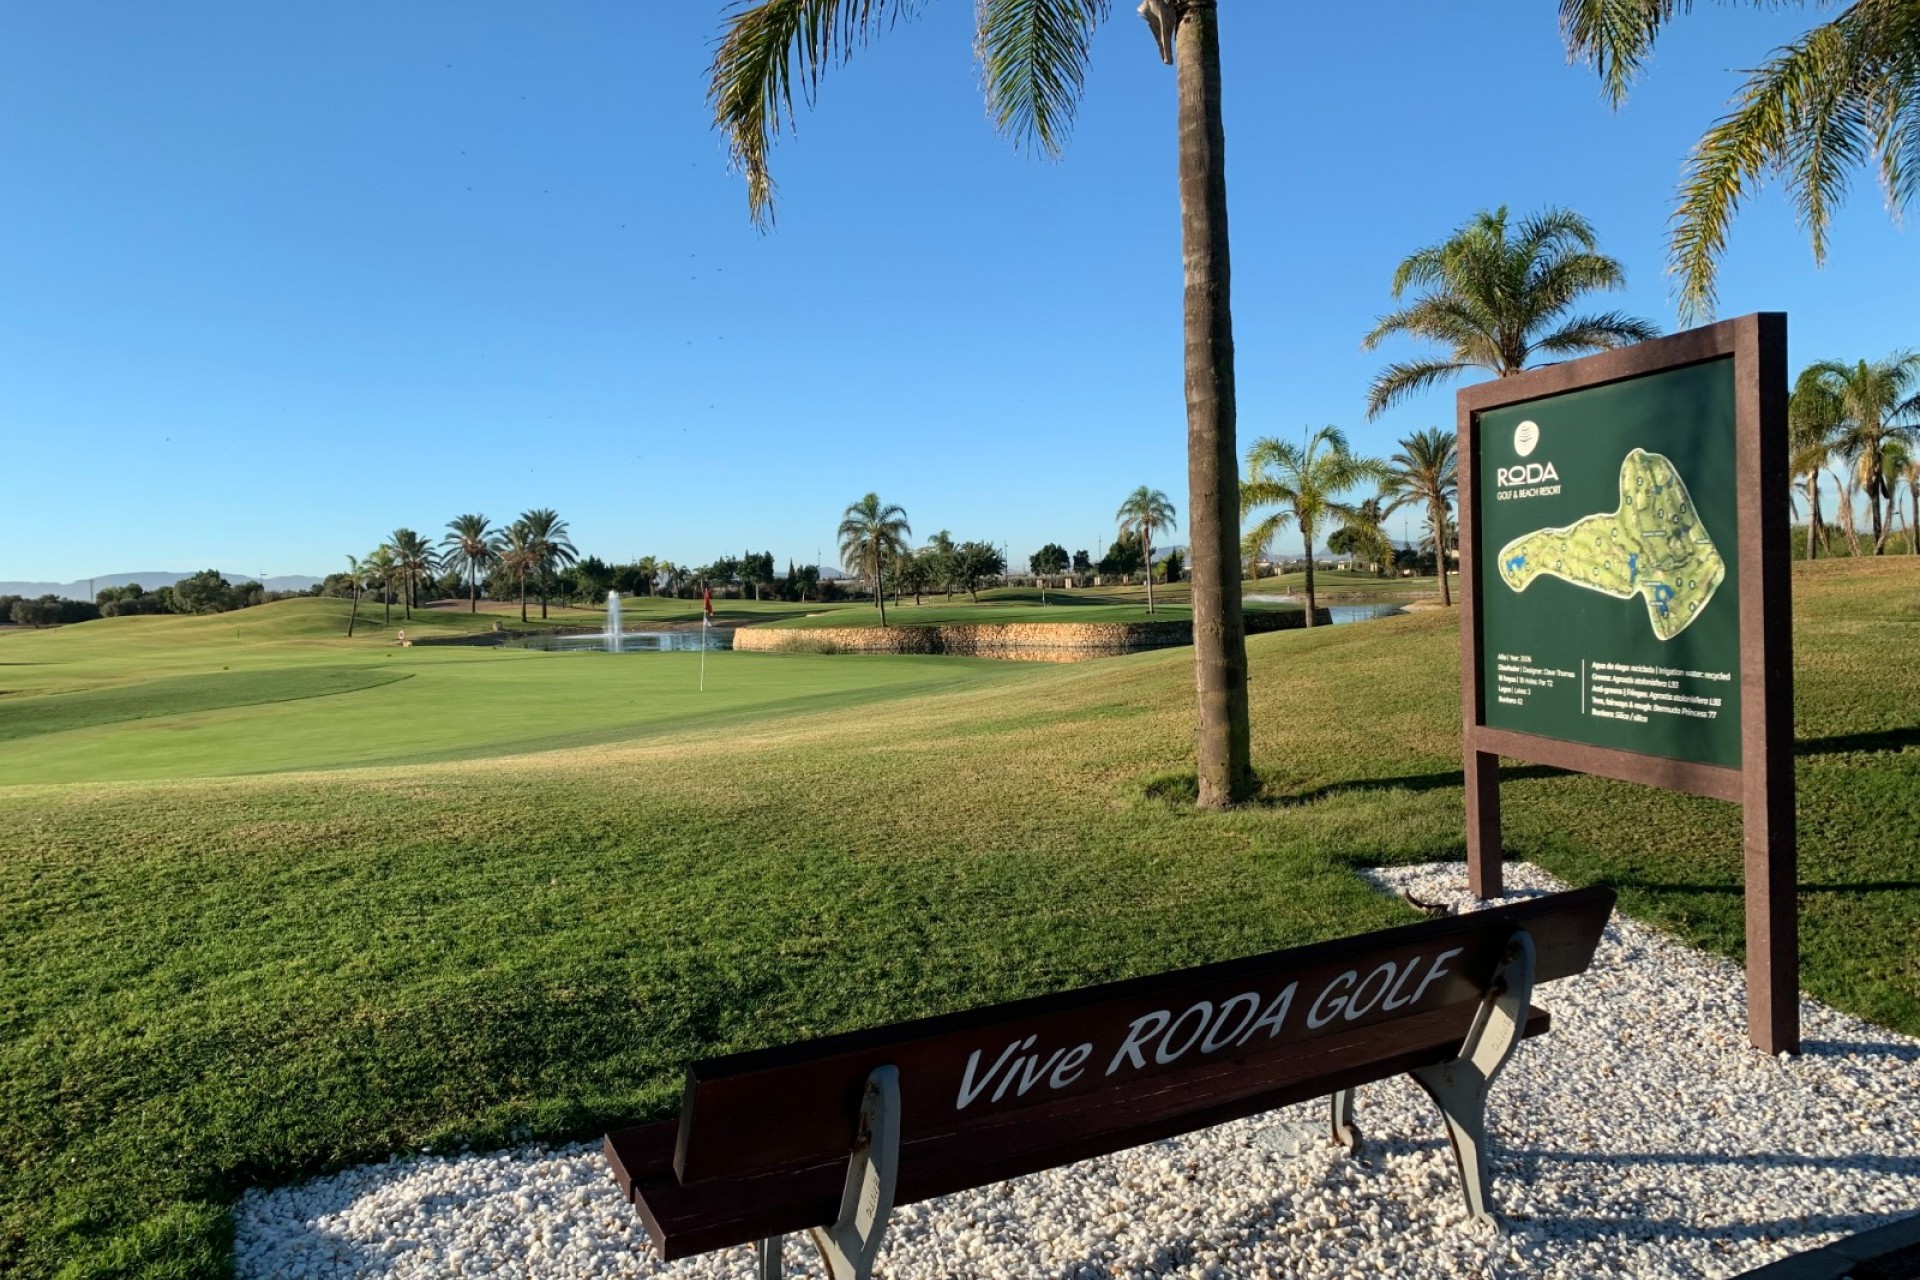 Obra nueva - Chalet de golf - Roda Golf & Beach Resort, San Javier - Costa Calida